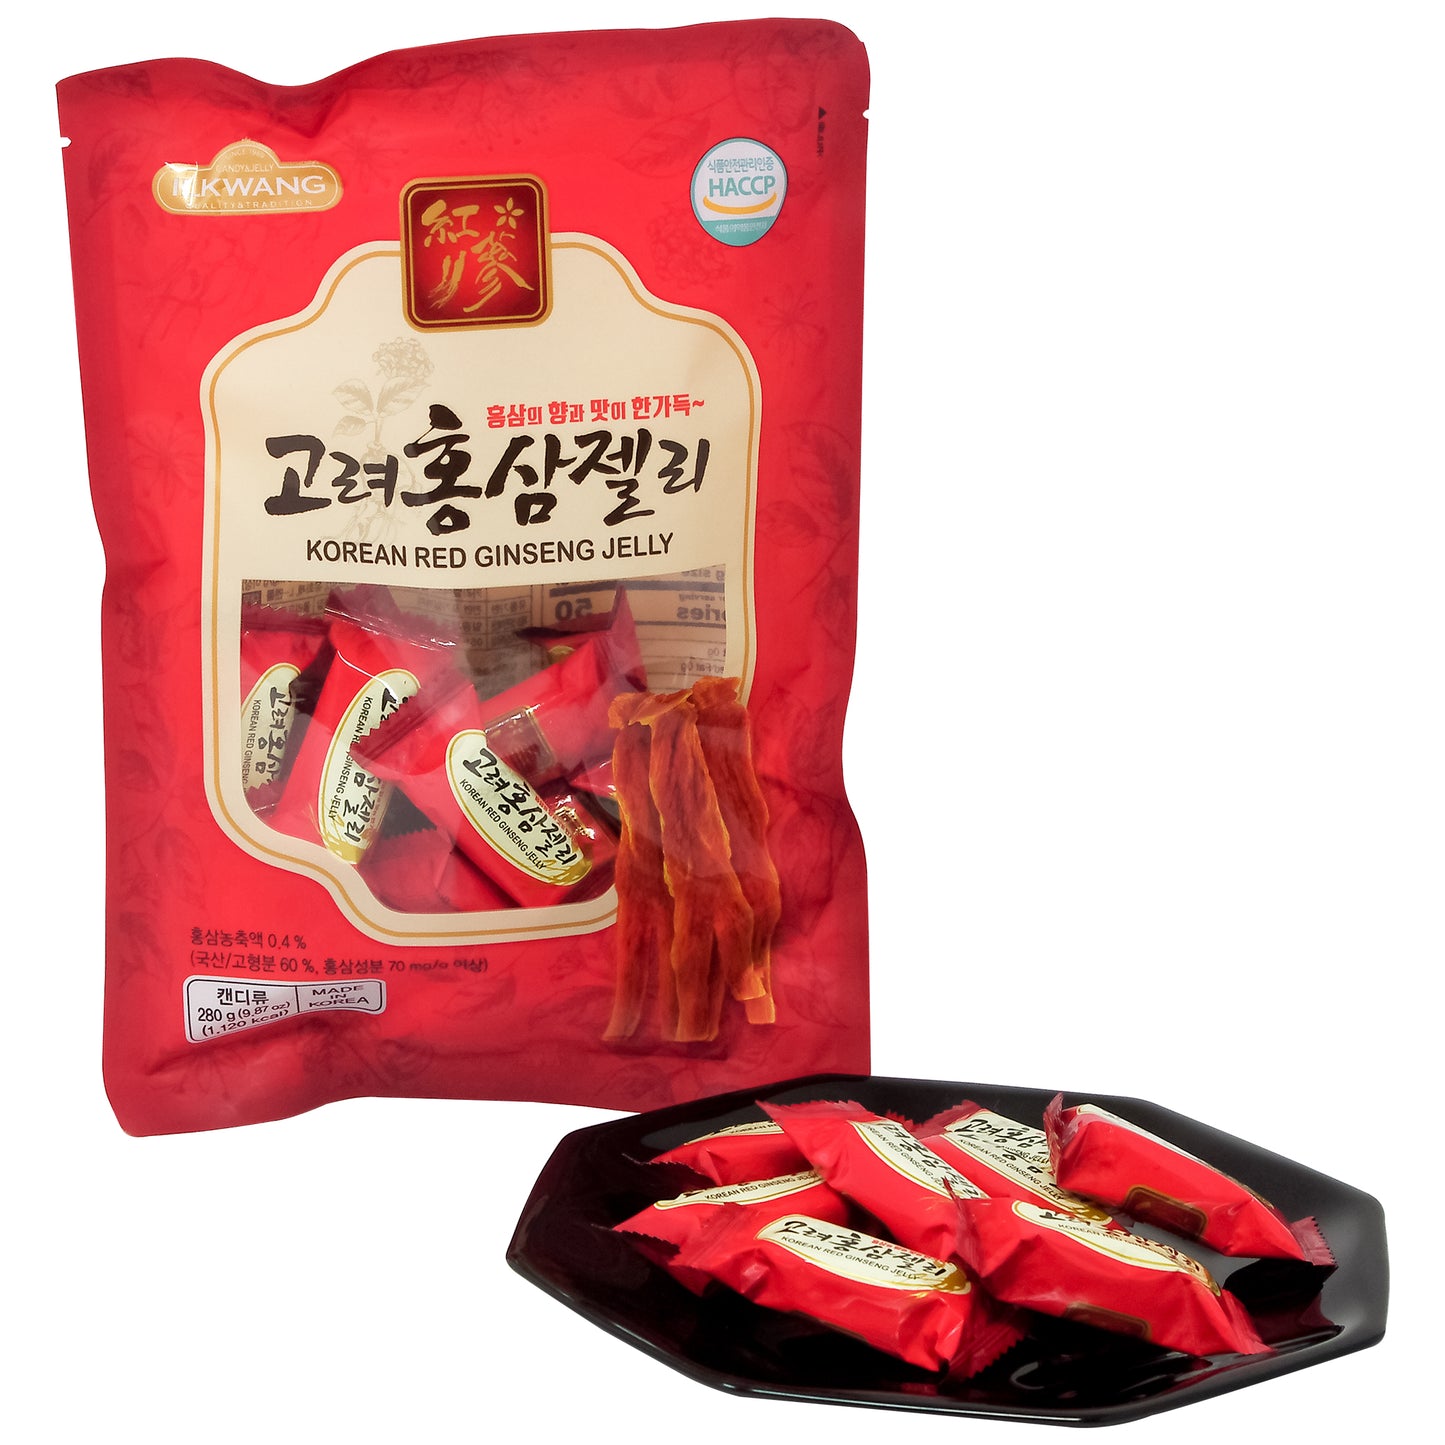 Korean Red Ginseng Jelly 280g X 2 / refreshing/ginseng extract and powder/Korean Made